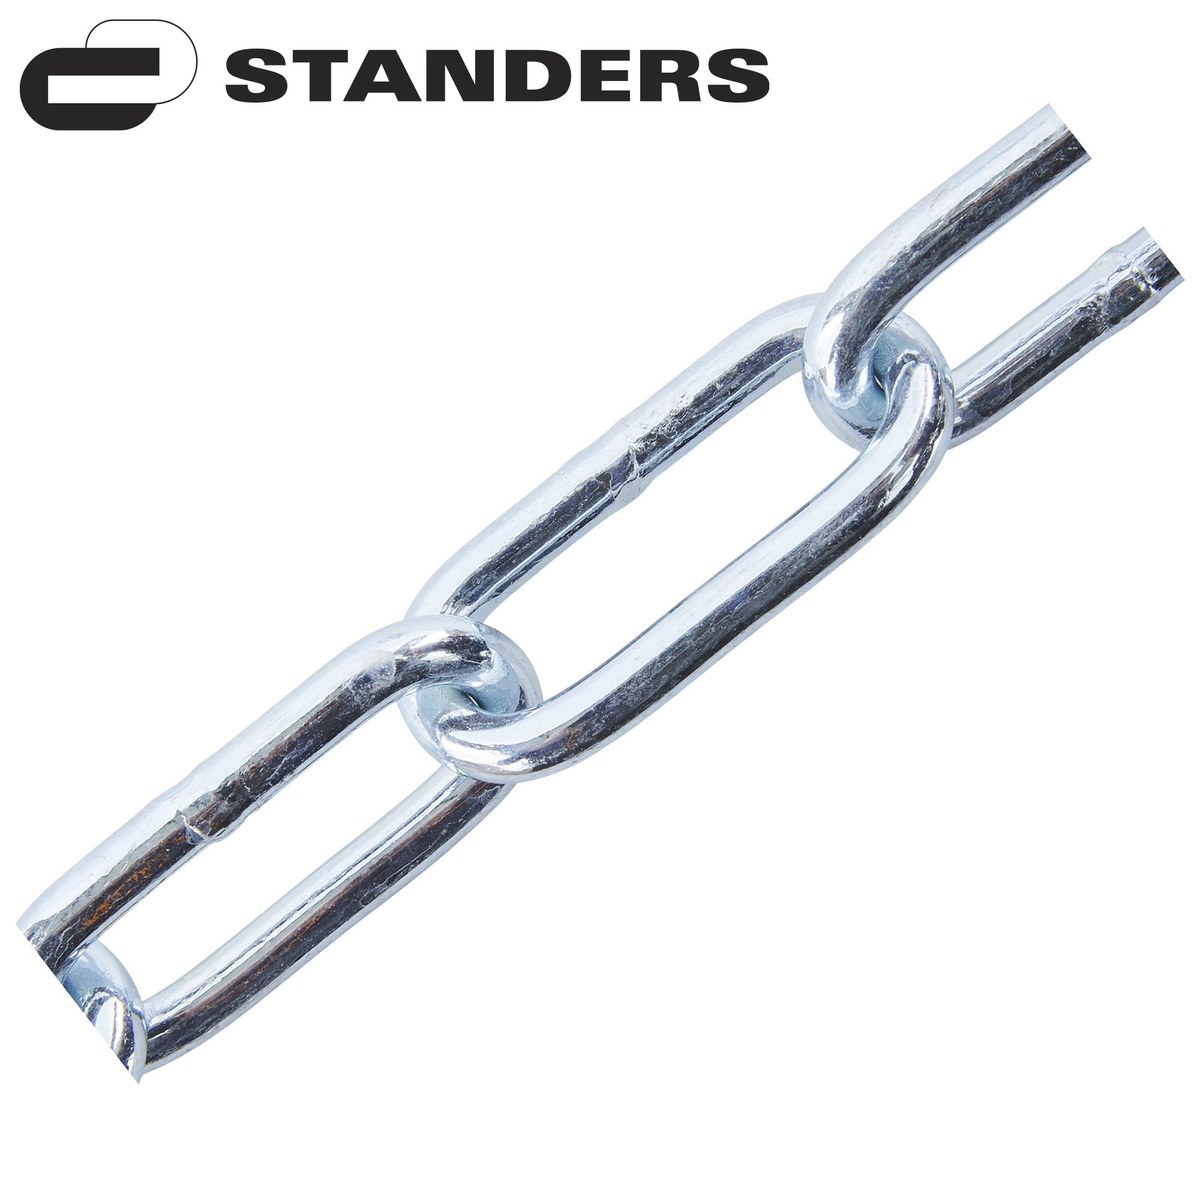 Цепь Standers оцинкованная сталь длинное звено 6 мм 5 м/уп.